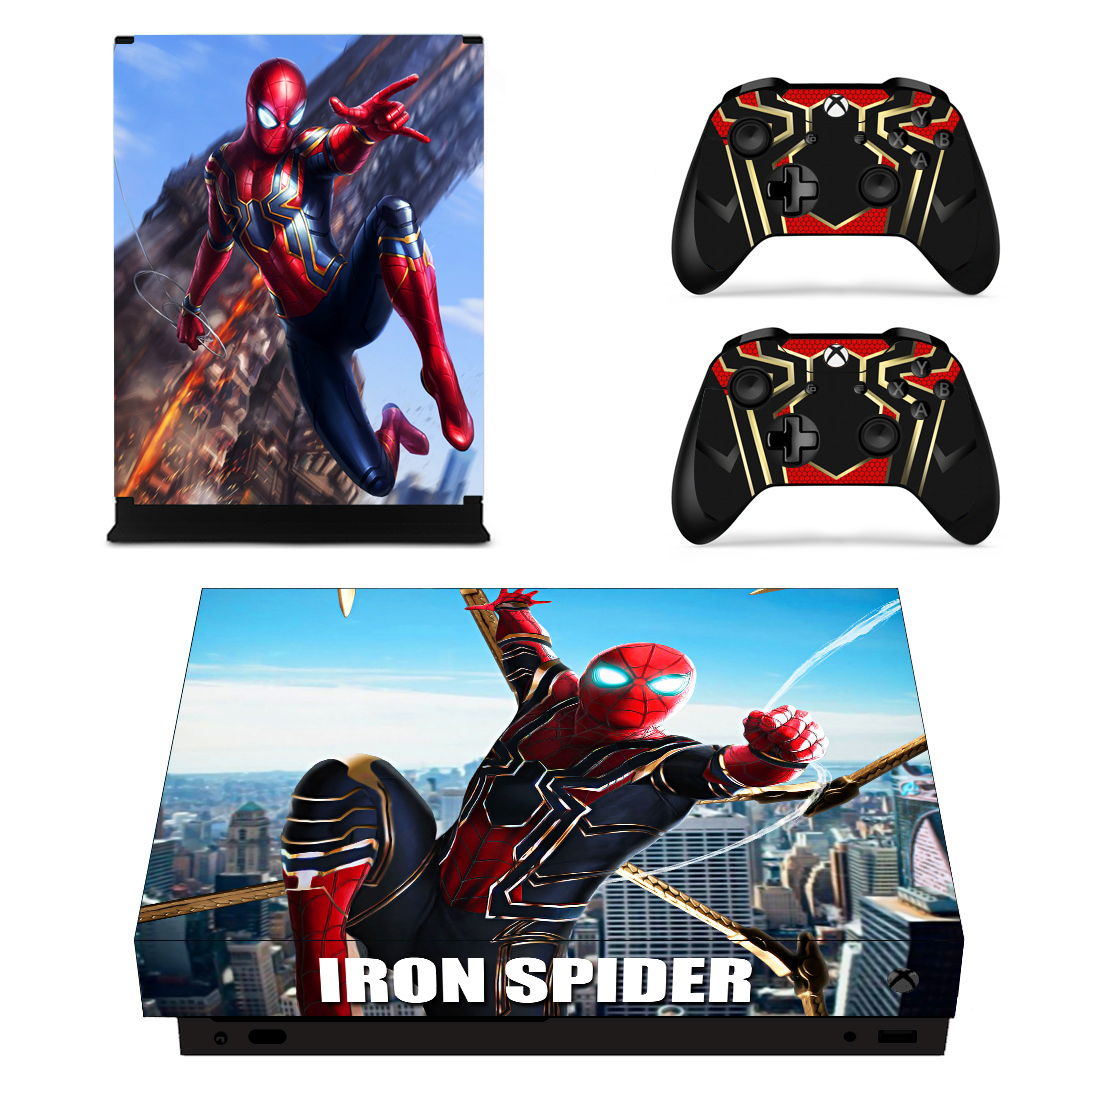 Iron Spider Man Avengers Marvel Skin Xbox One X Console